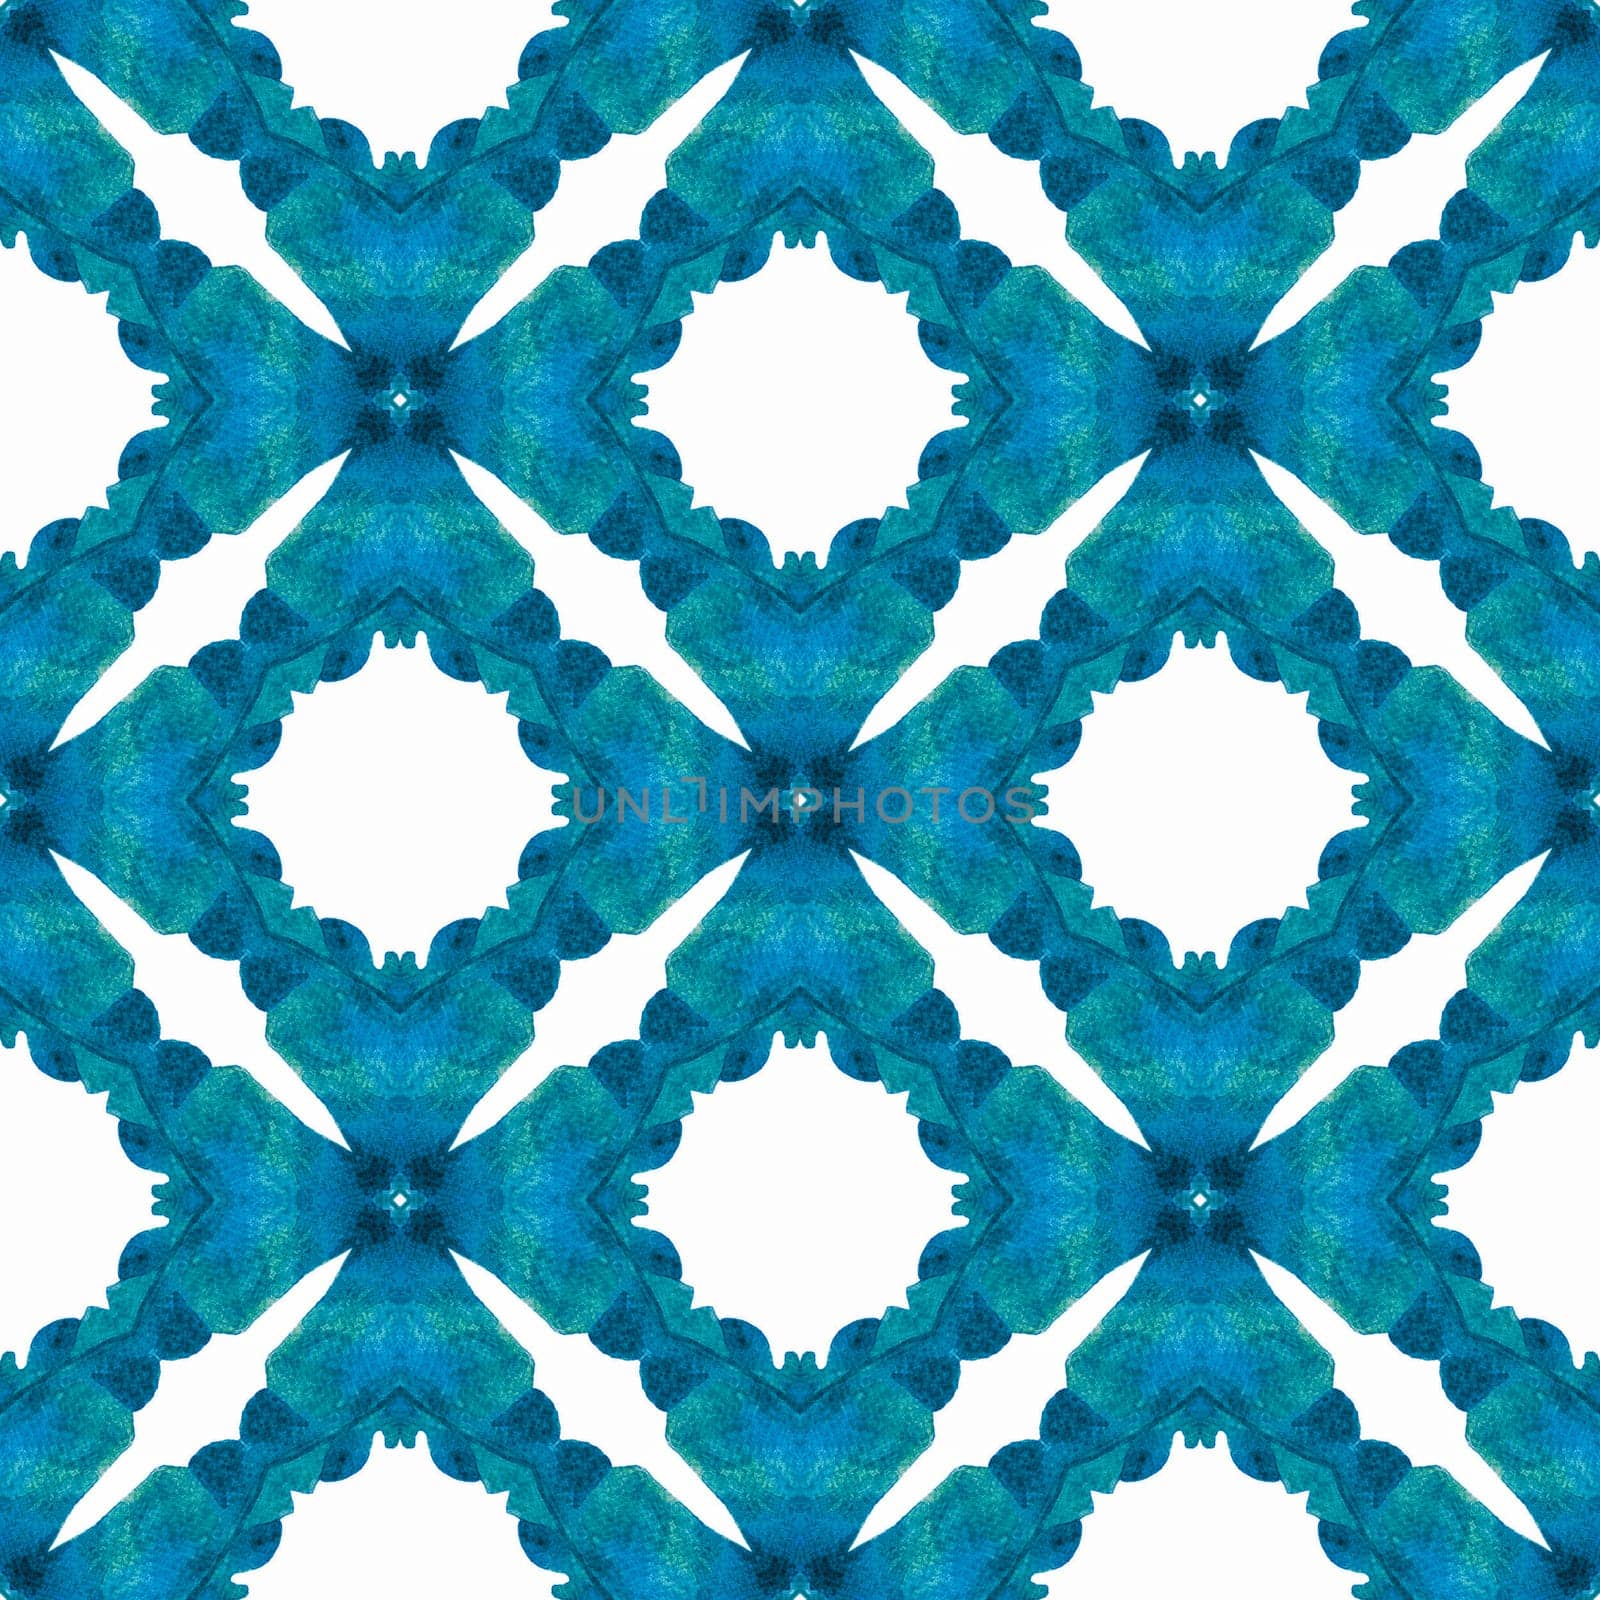 Chevron watercolor pattern. Blue likable boho chic summer design. Textile ready classic print, swimwear fabric, wallpaper, wrapping. Green geometric chevron watercolor border.